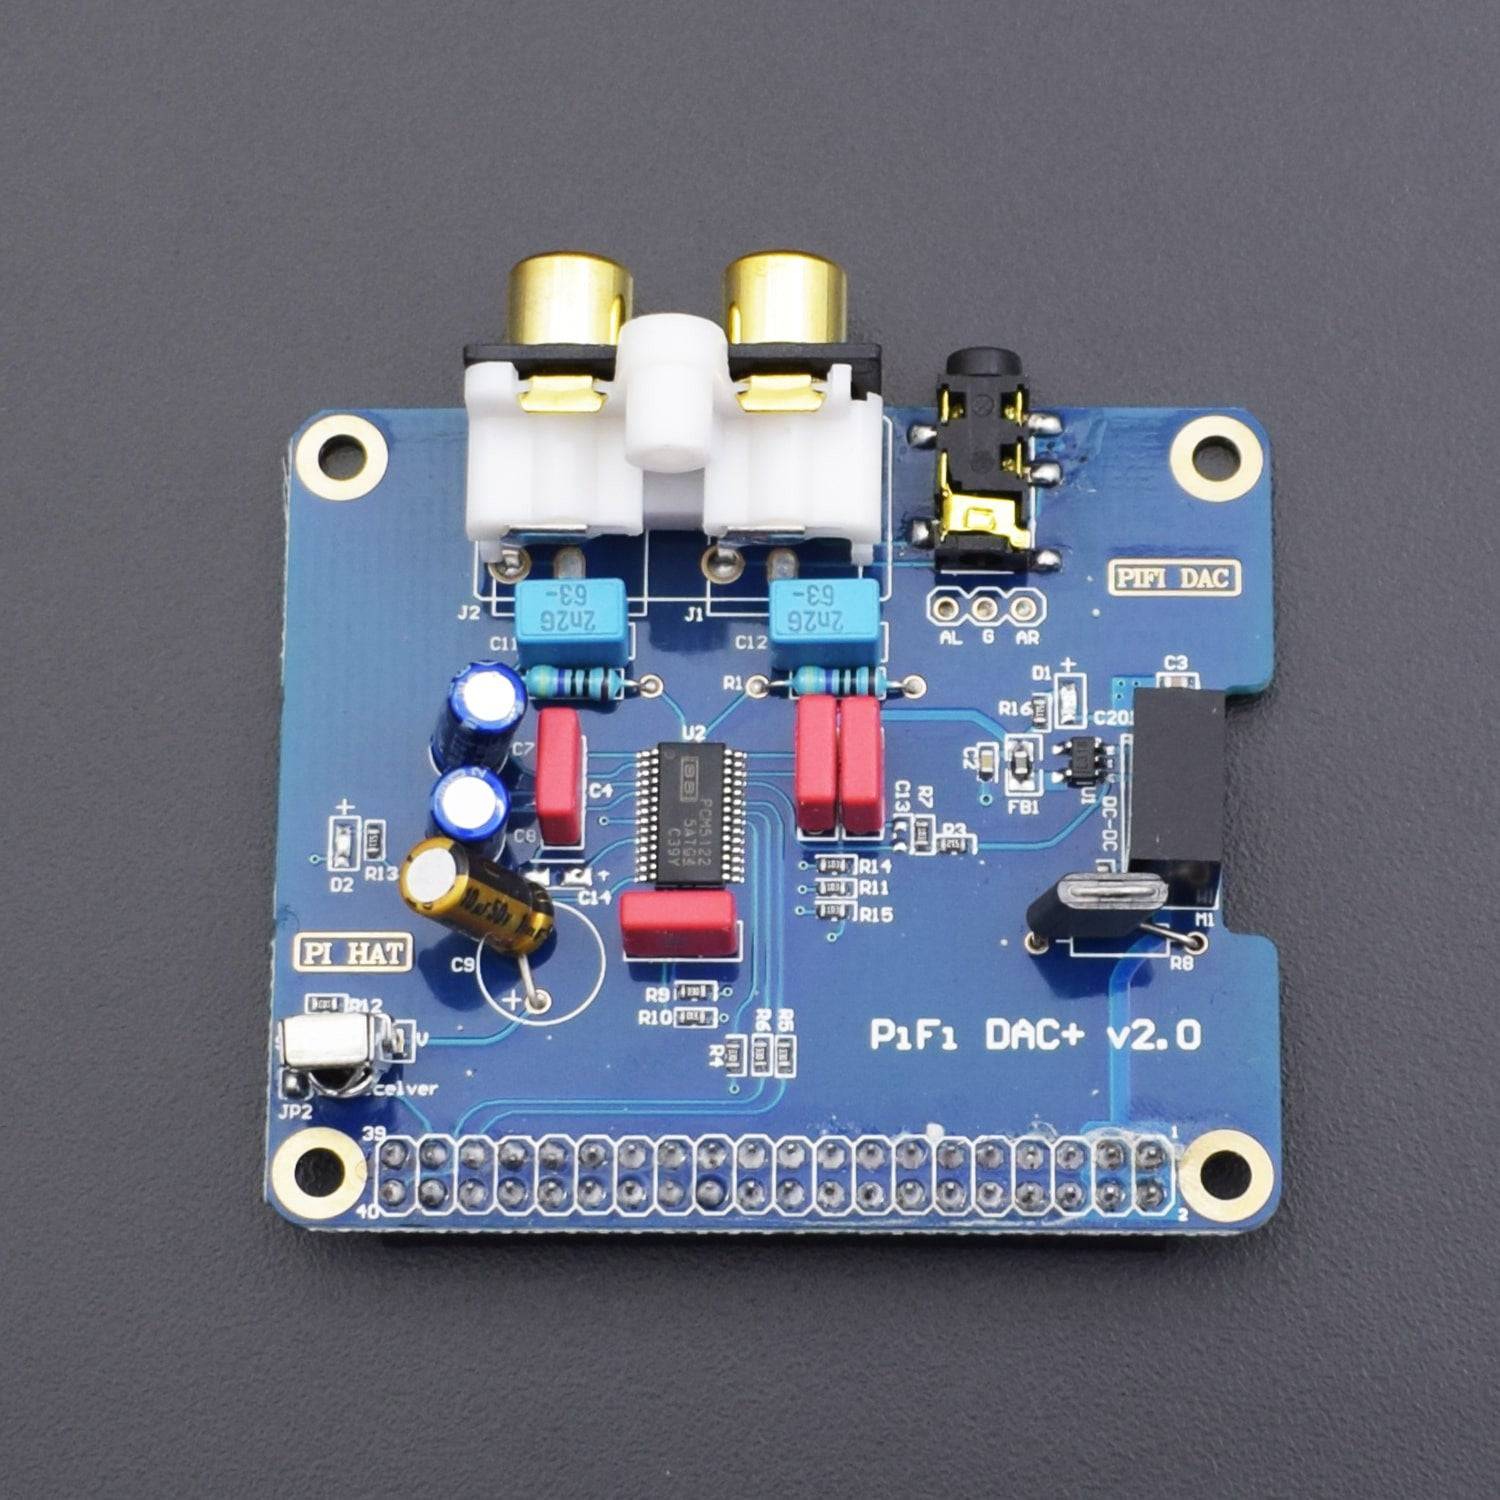 HIFI DAC Audio Sound Card Module I2S interface for Raspberry Pi – Pi  Australia